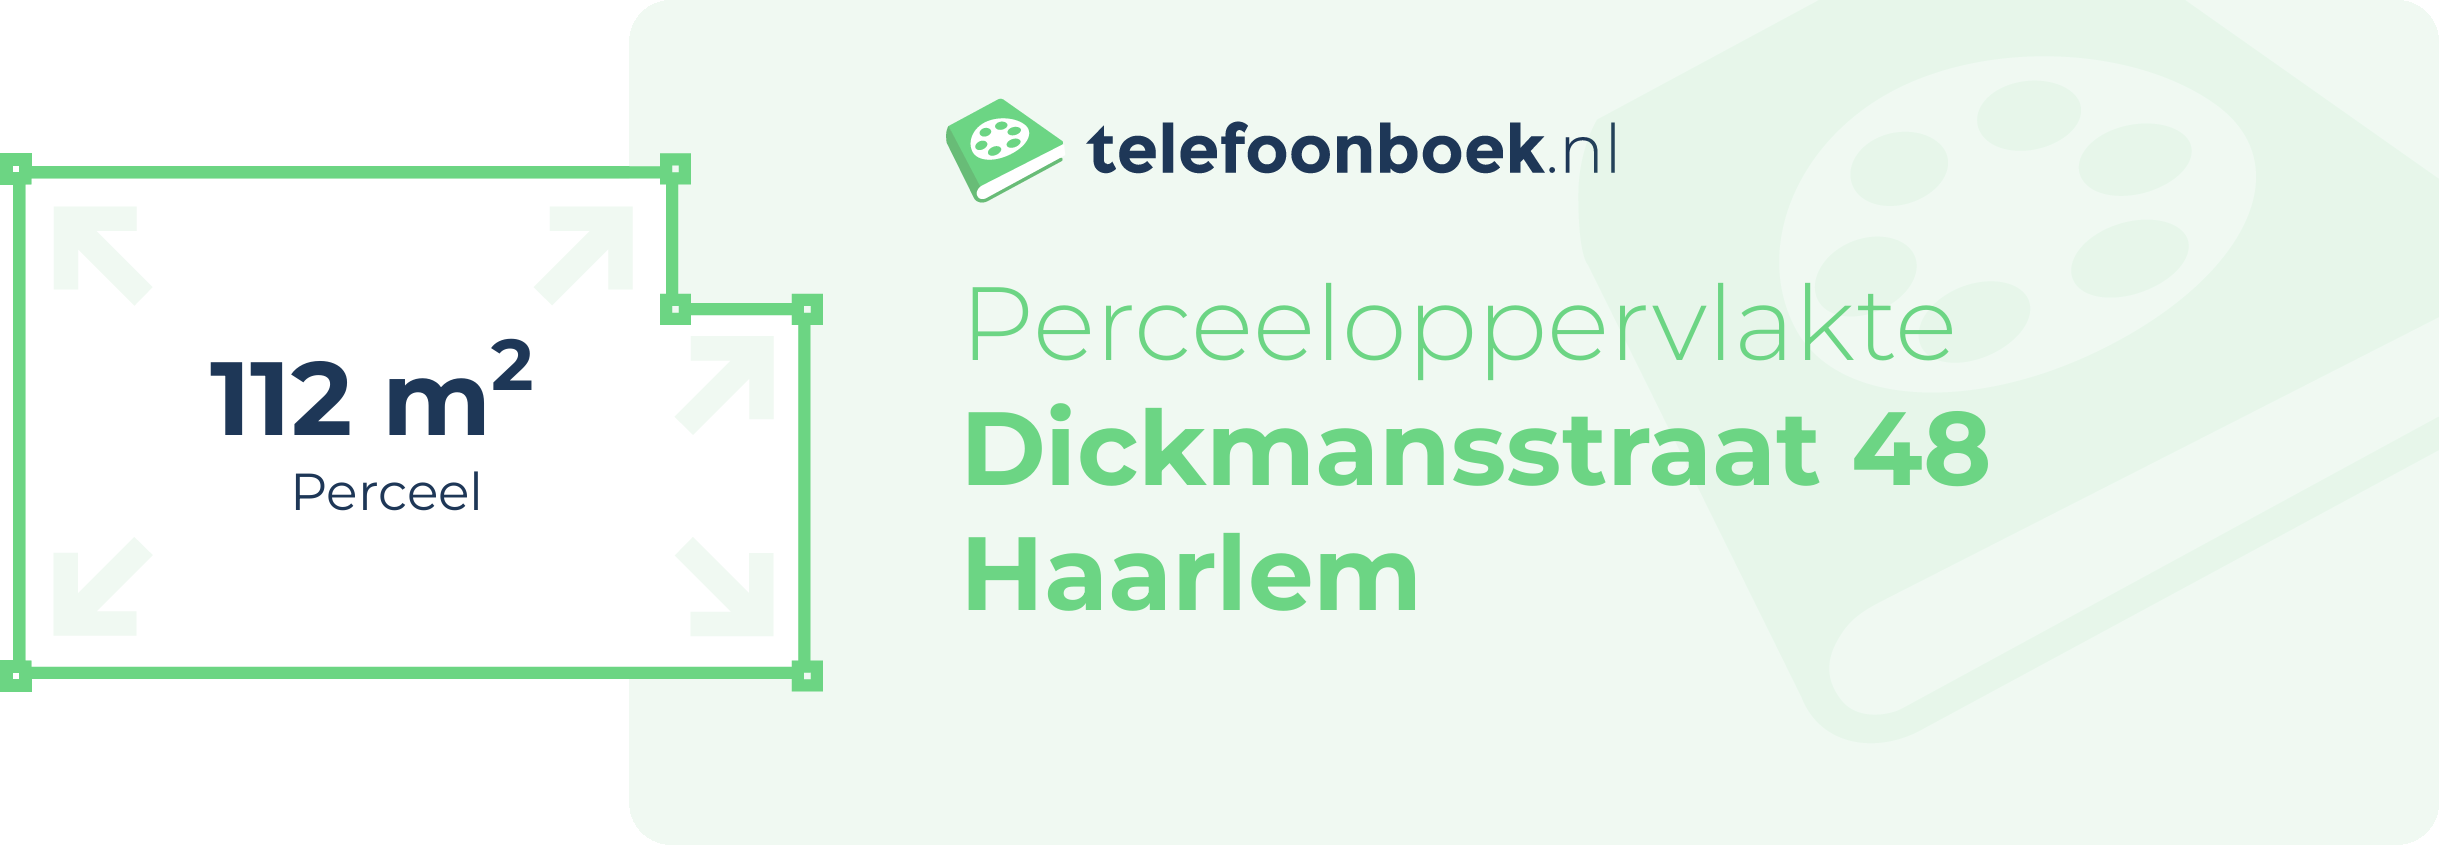 Perceeloppervlakte Dickmansstraat 48 Haarlem